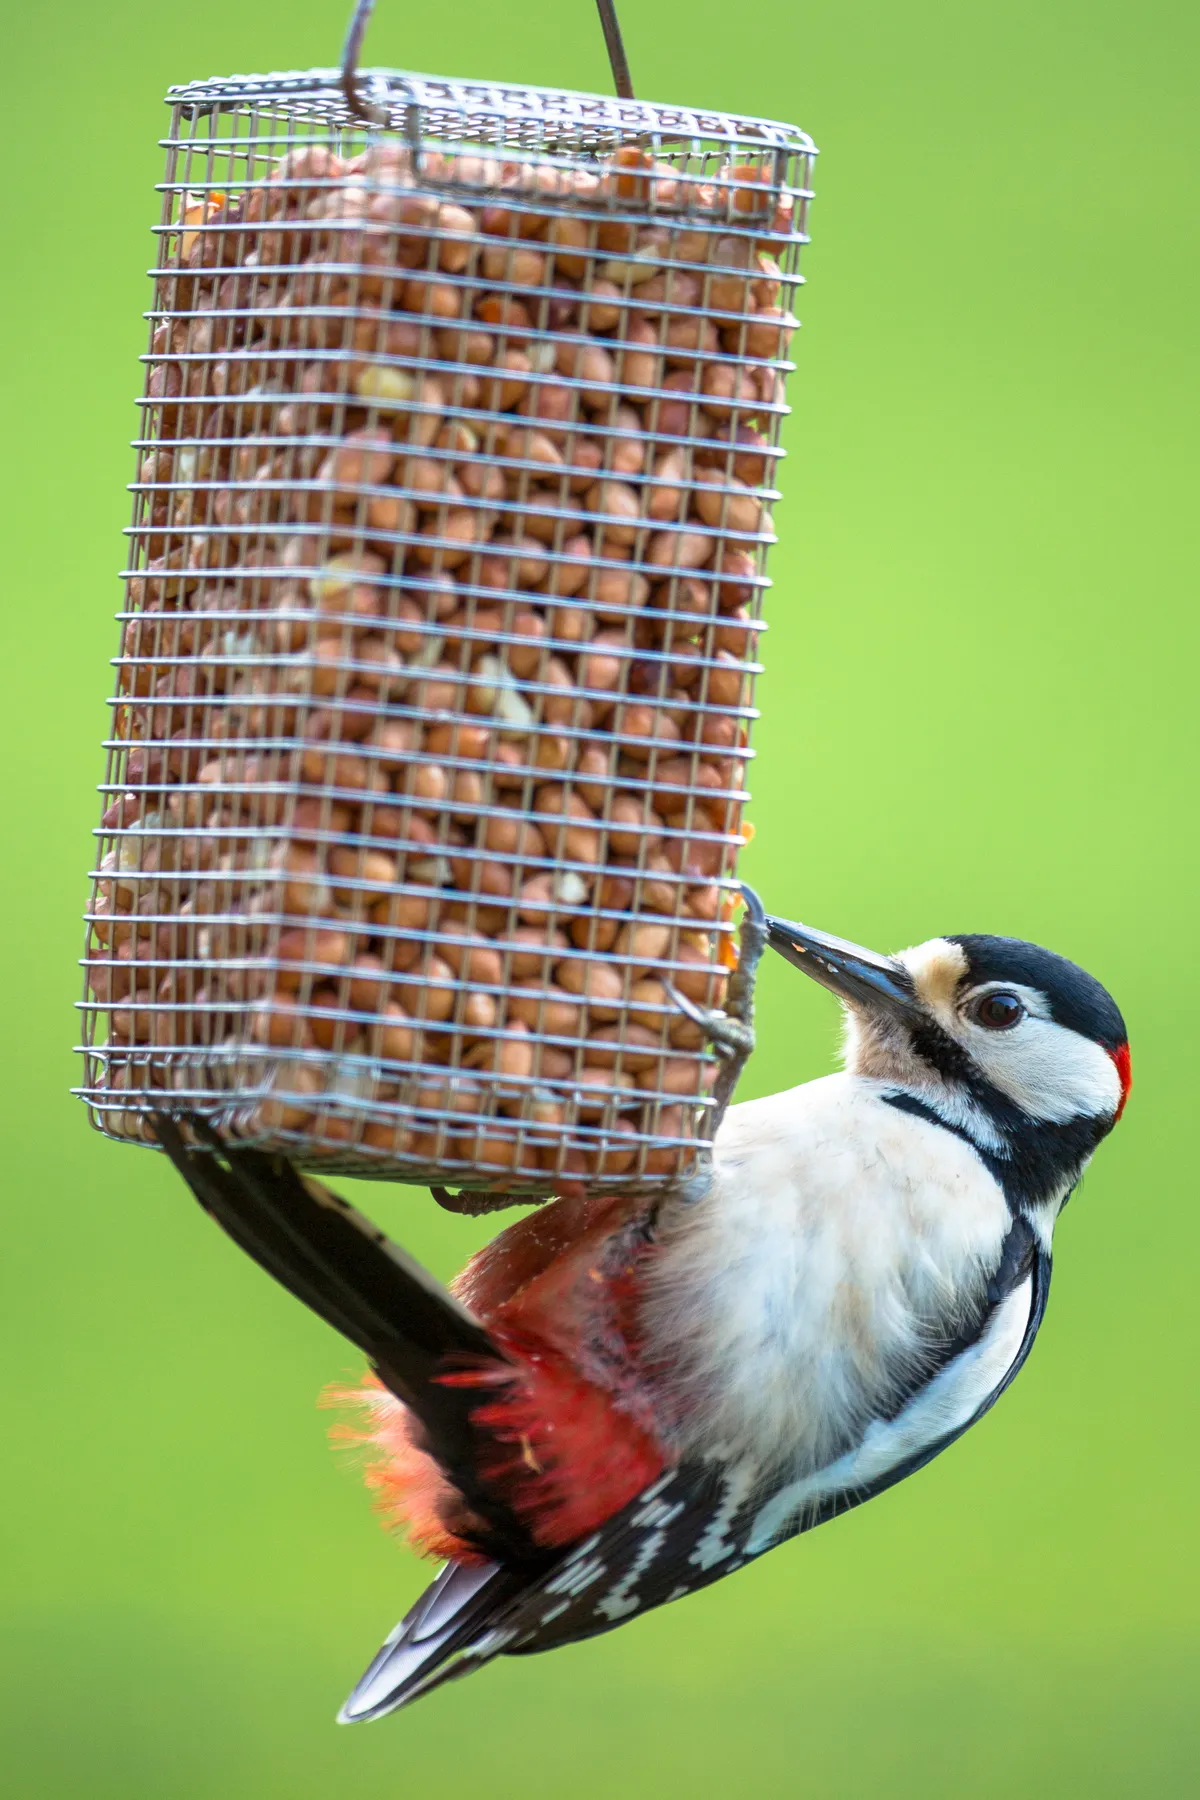 Great spotted wodpecker (Dendrocopus major) on a peanut bird feeder in a garden